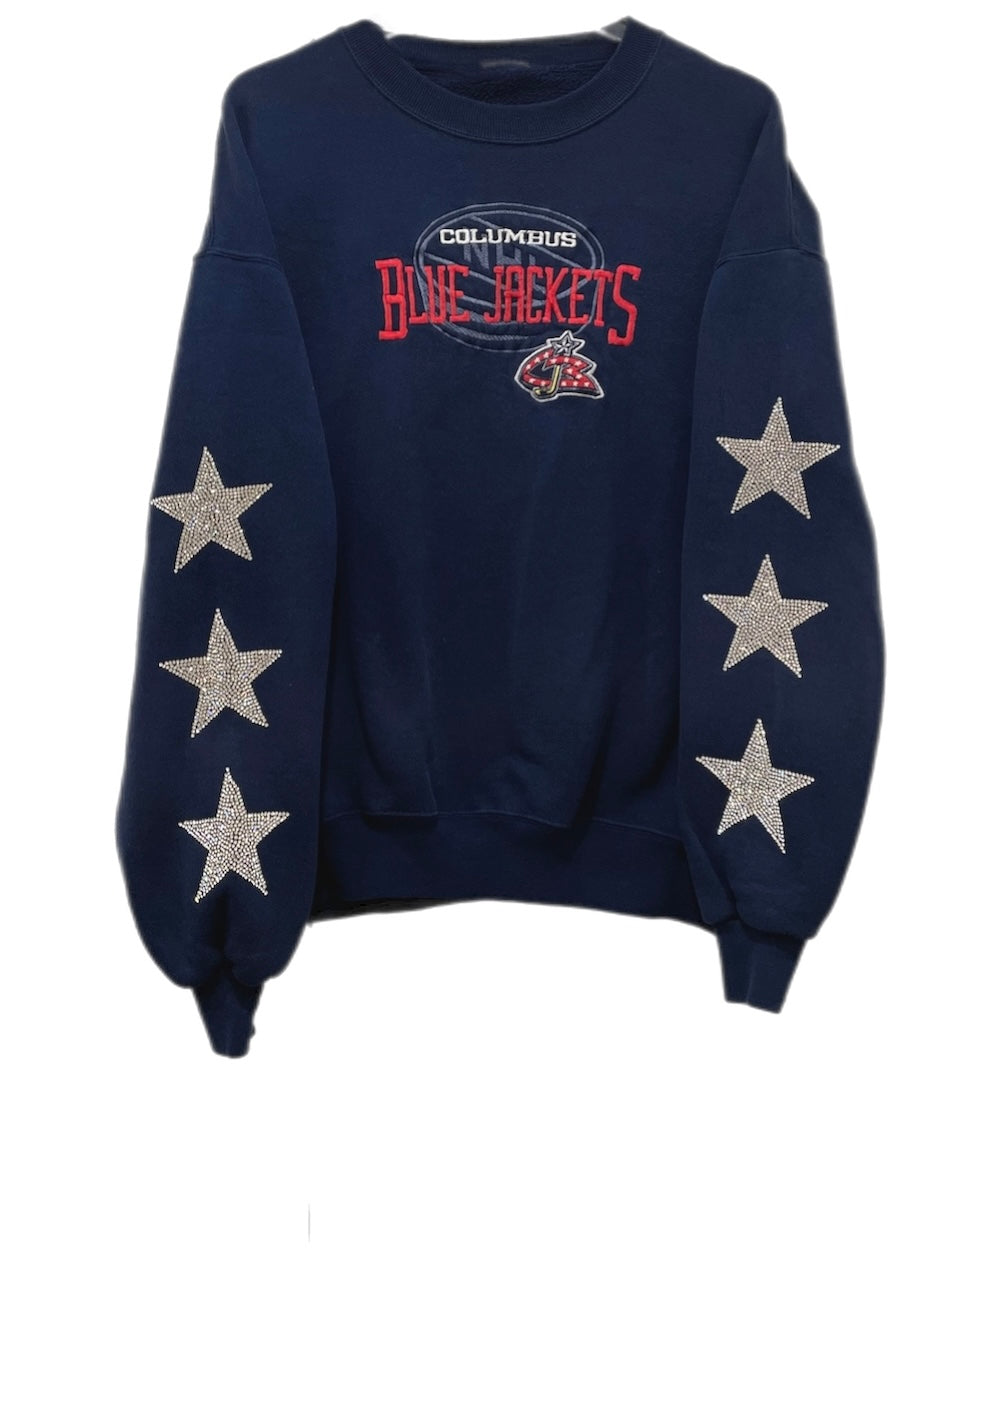 Columbus Blue Jackets, NHL One of a KIND Vintage Sweatshirt with Three Crystal Star Design